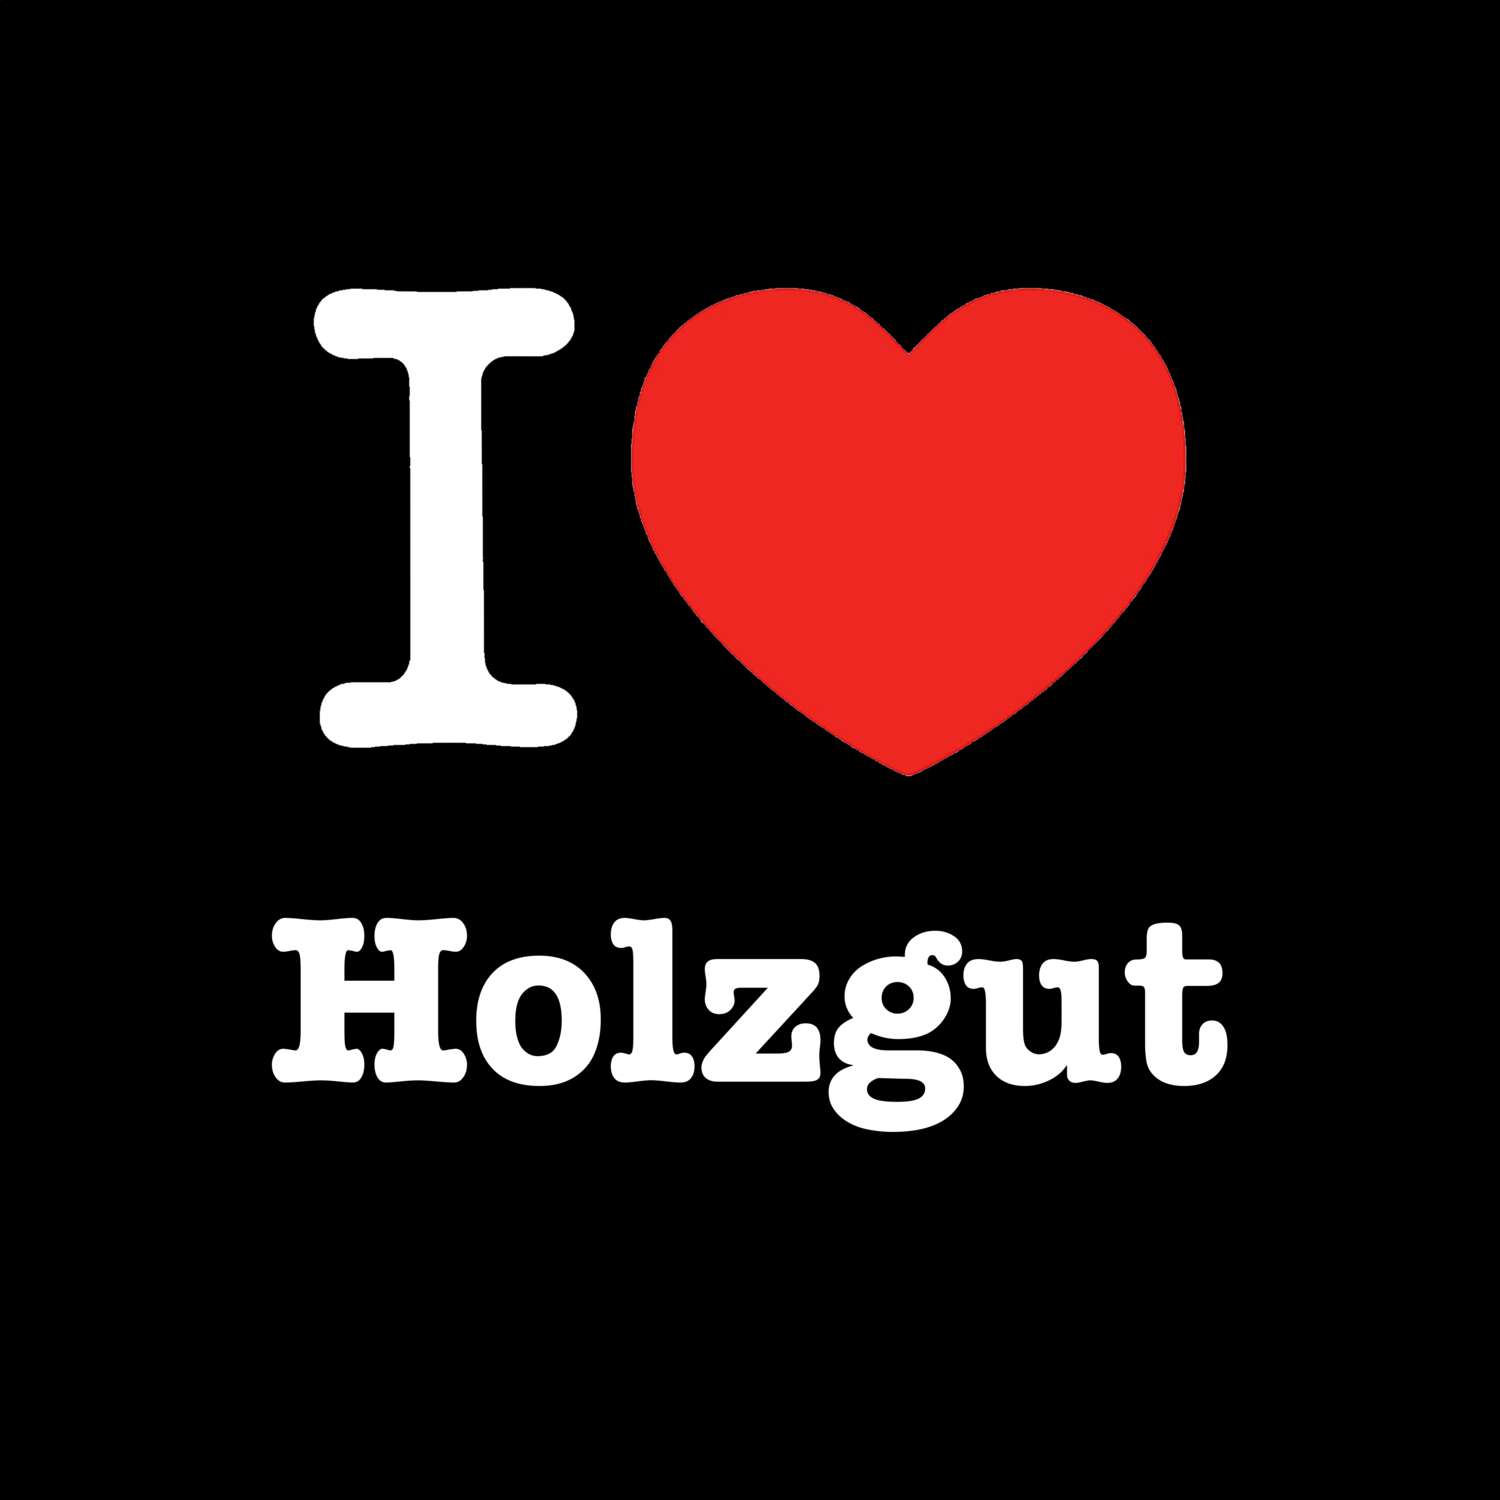 Holzgut T-Shirt »I love«